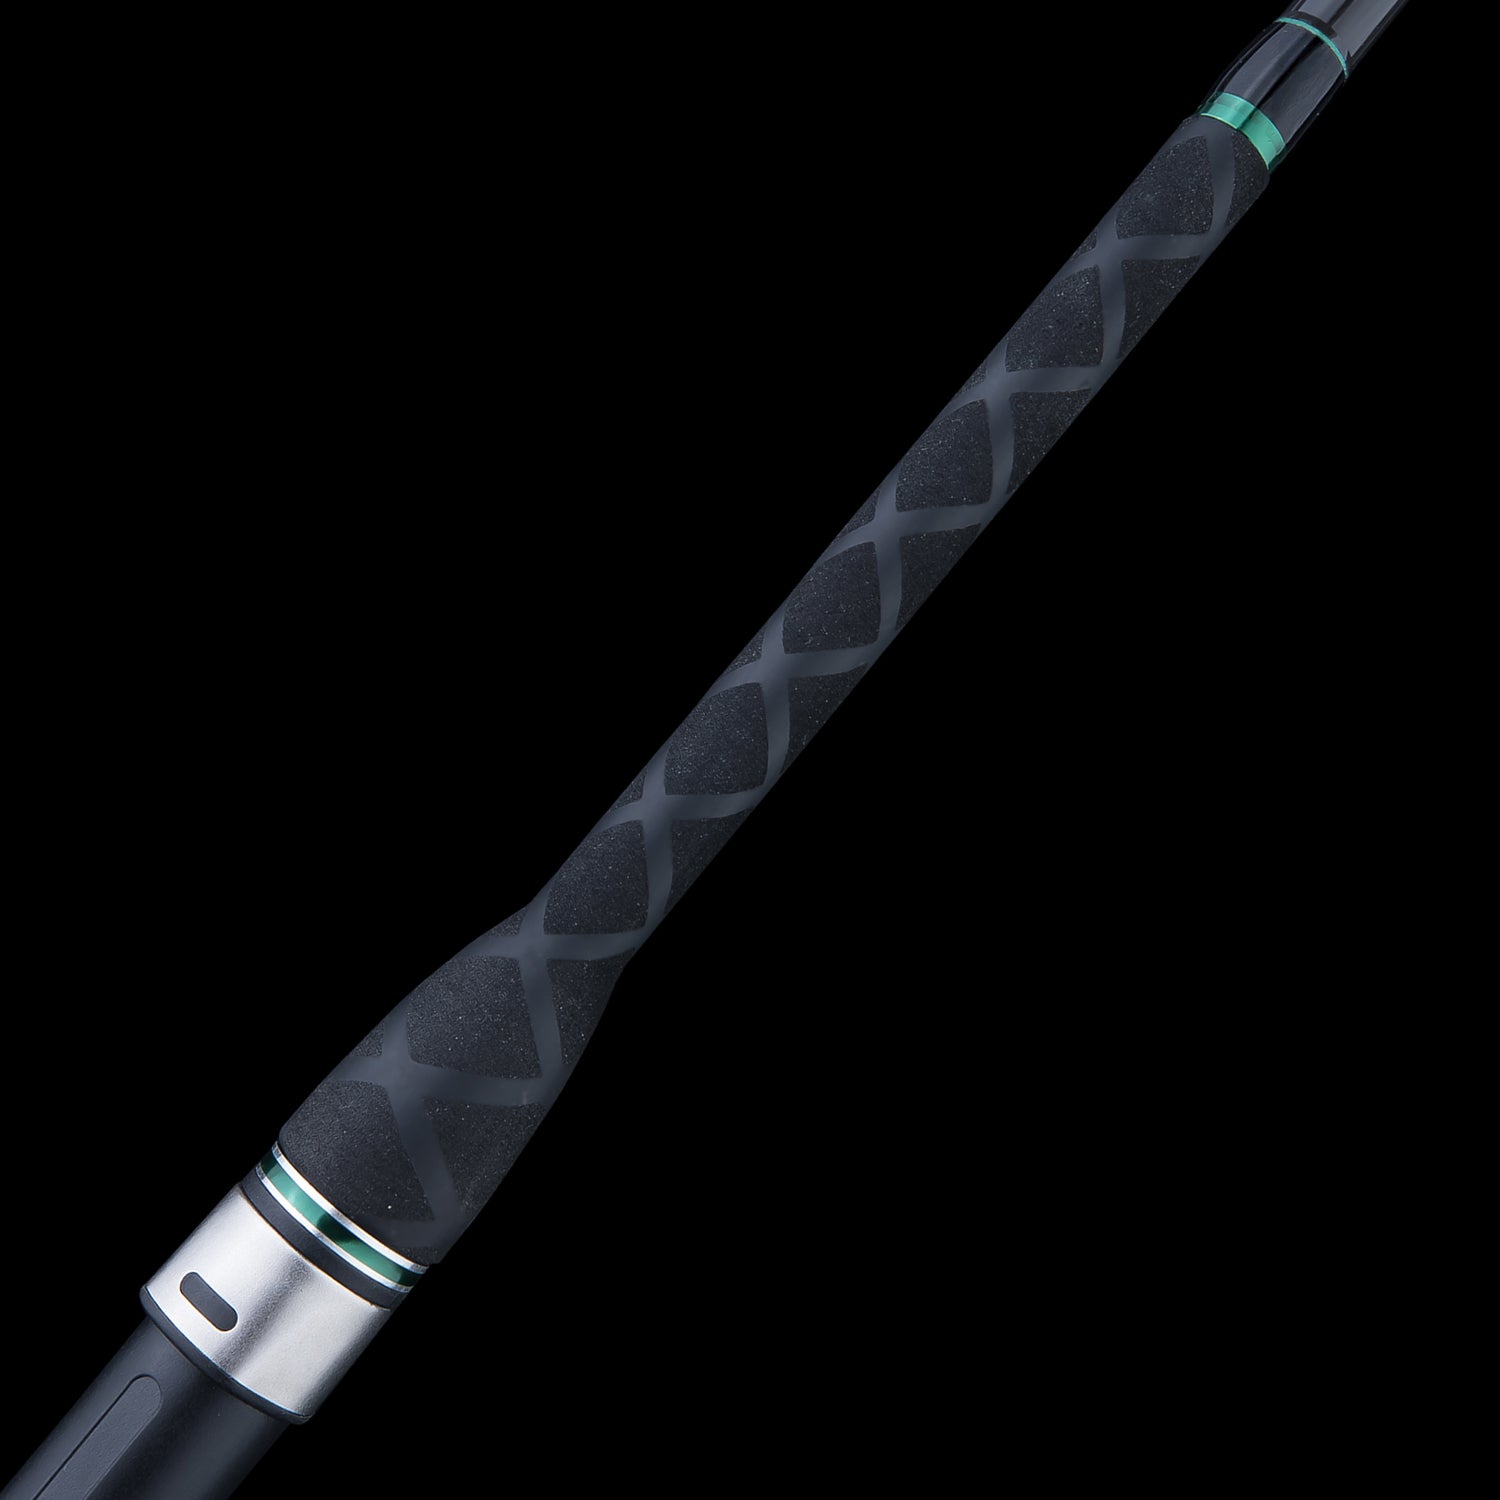 Berrypro Surf Spinning & Casting Fishing Rod Carbon Fiber Travel Fishing Rod13'3''-Spinning-3pc